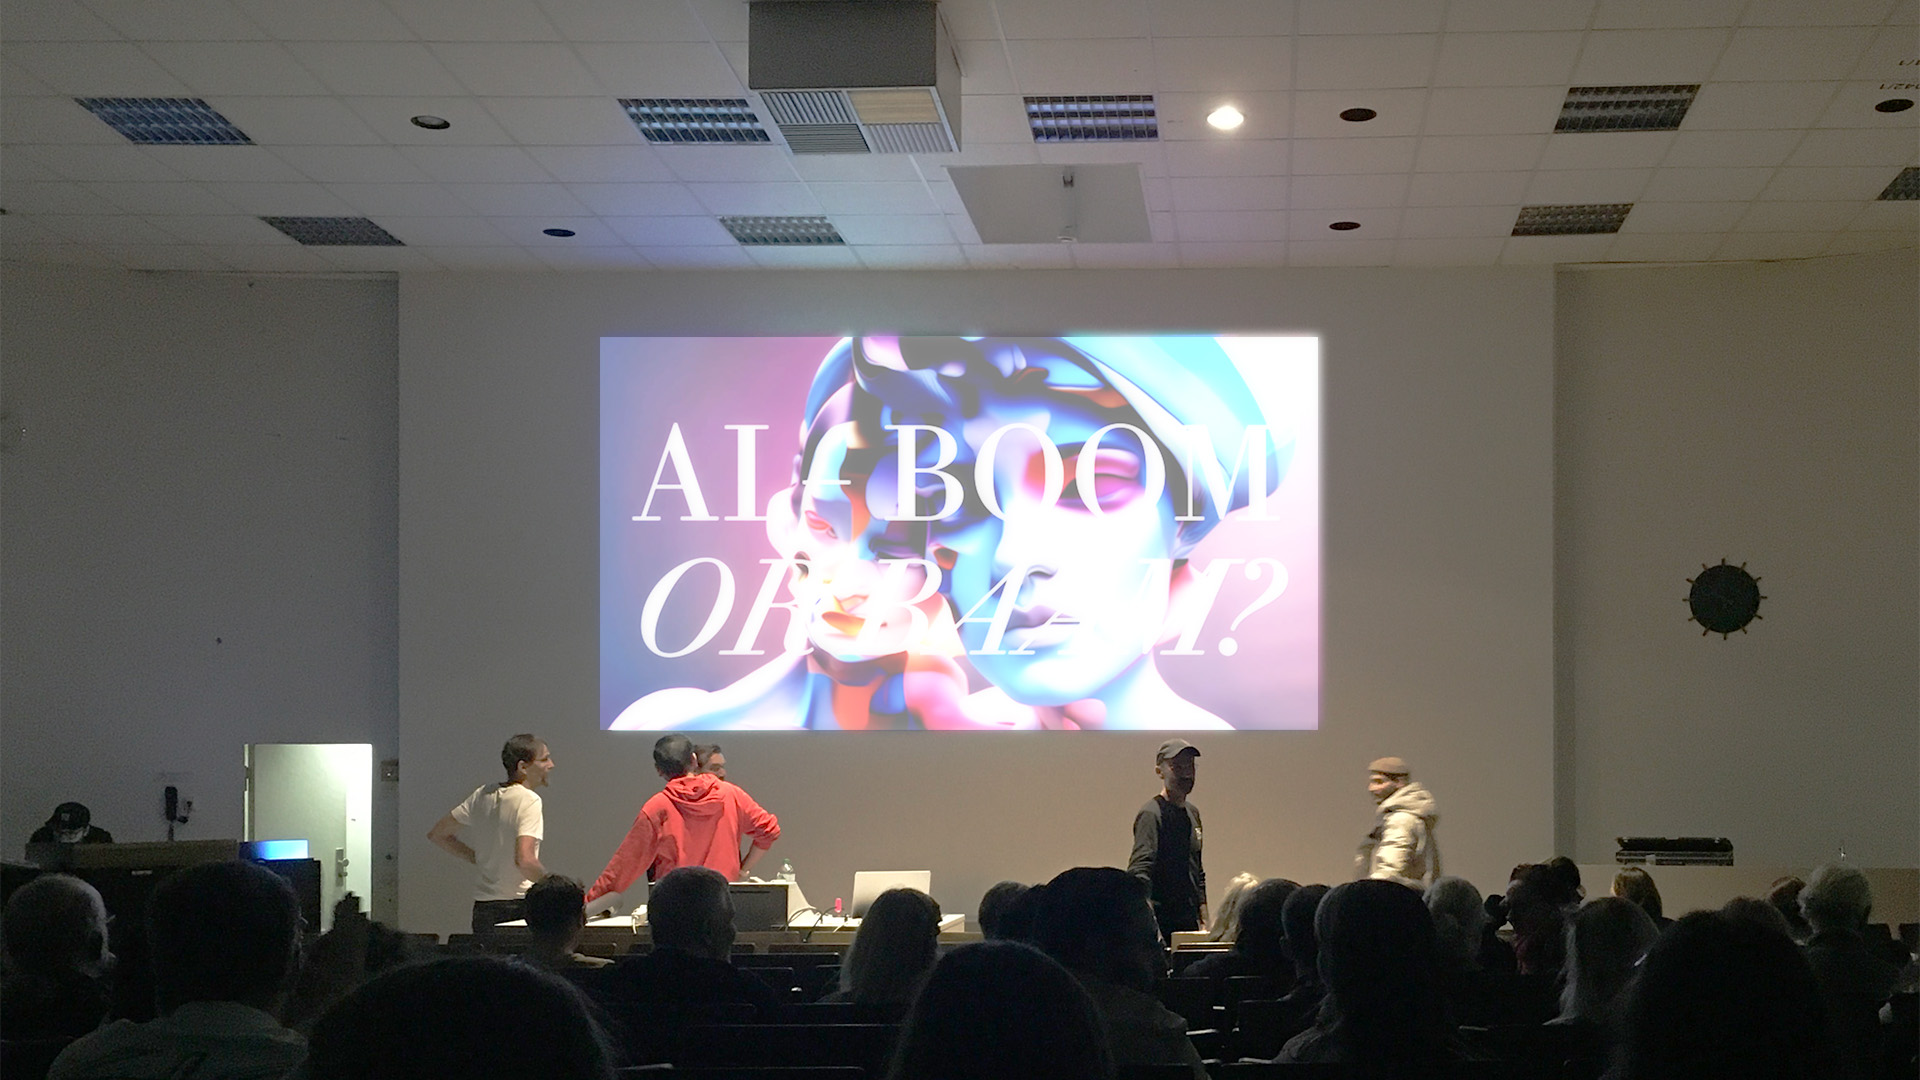 ADC-Konferenz AI - Boom or Bääm? in Krefeld